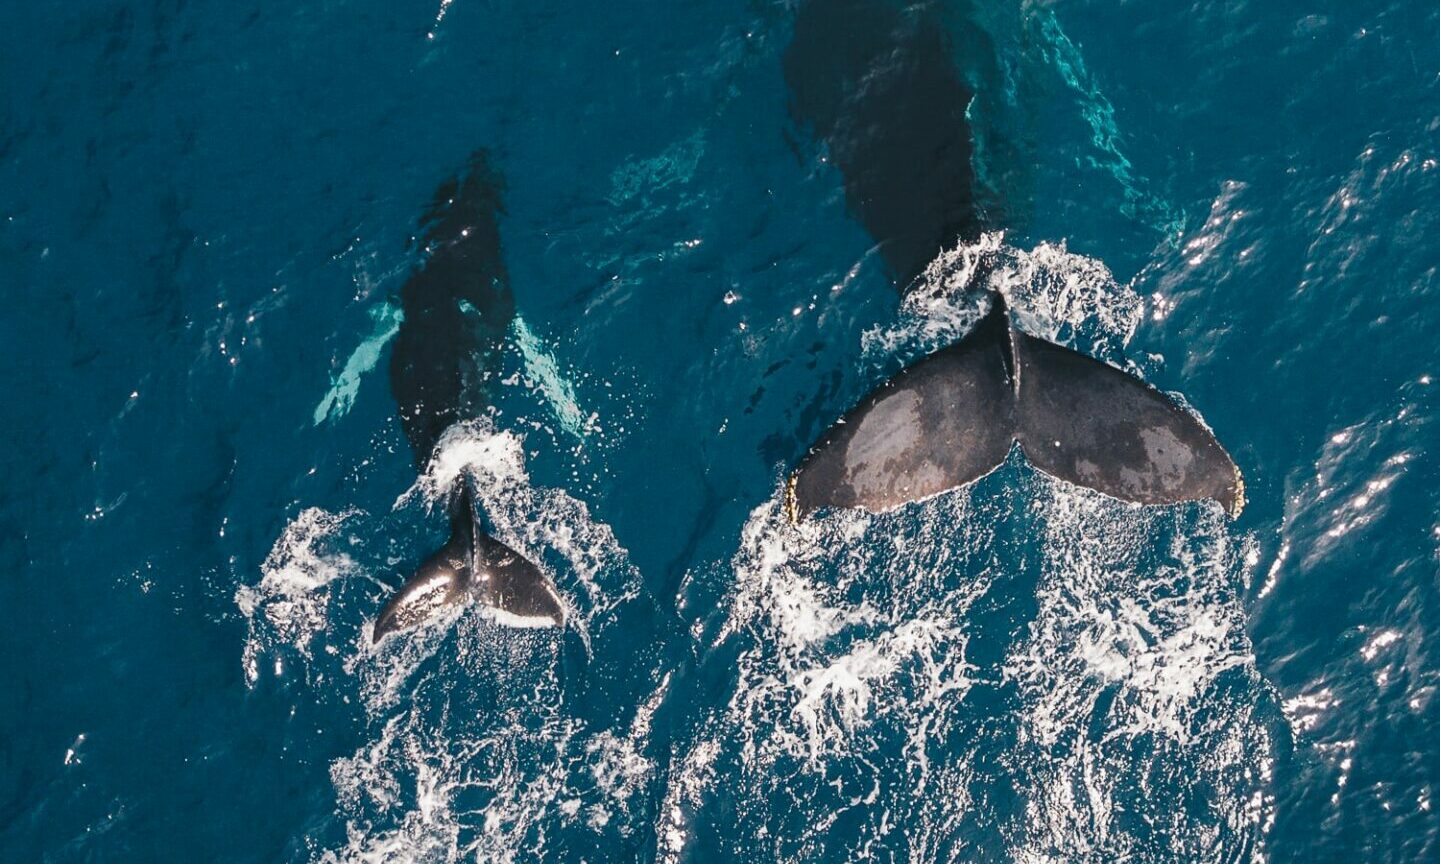 Baleias jubarte